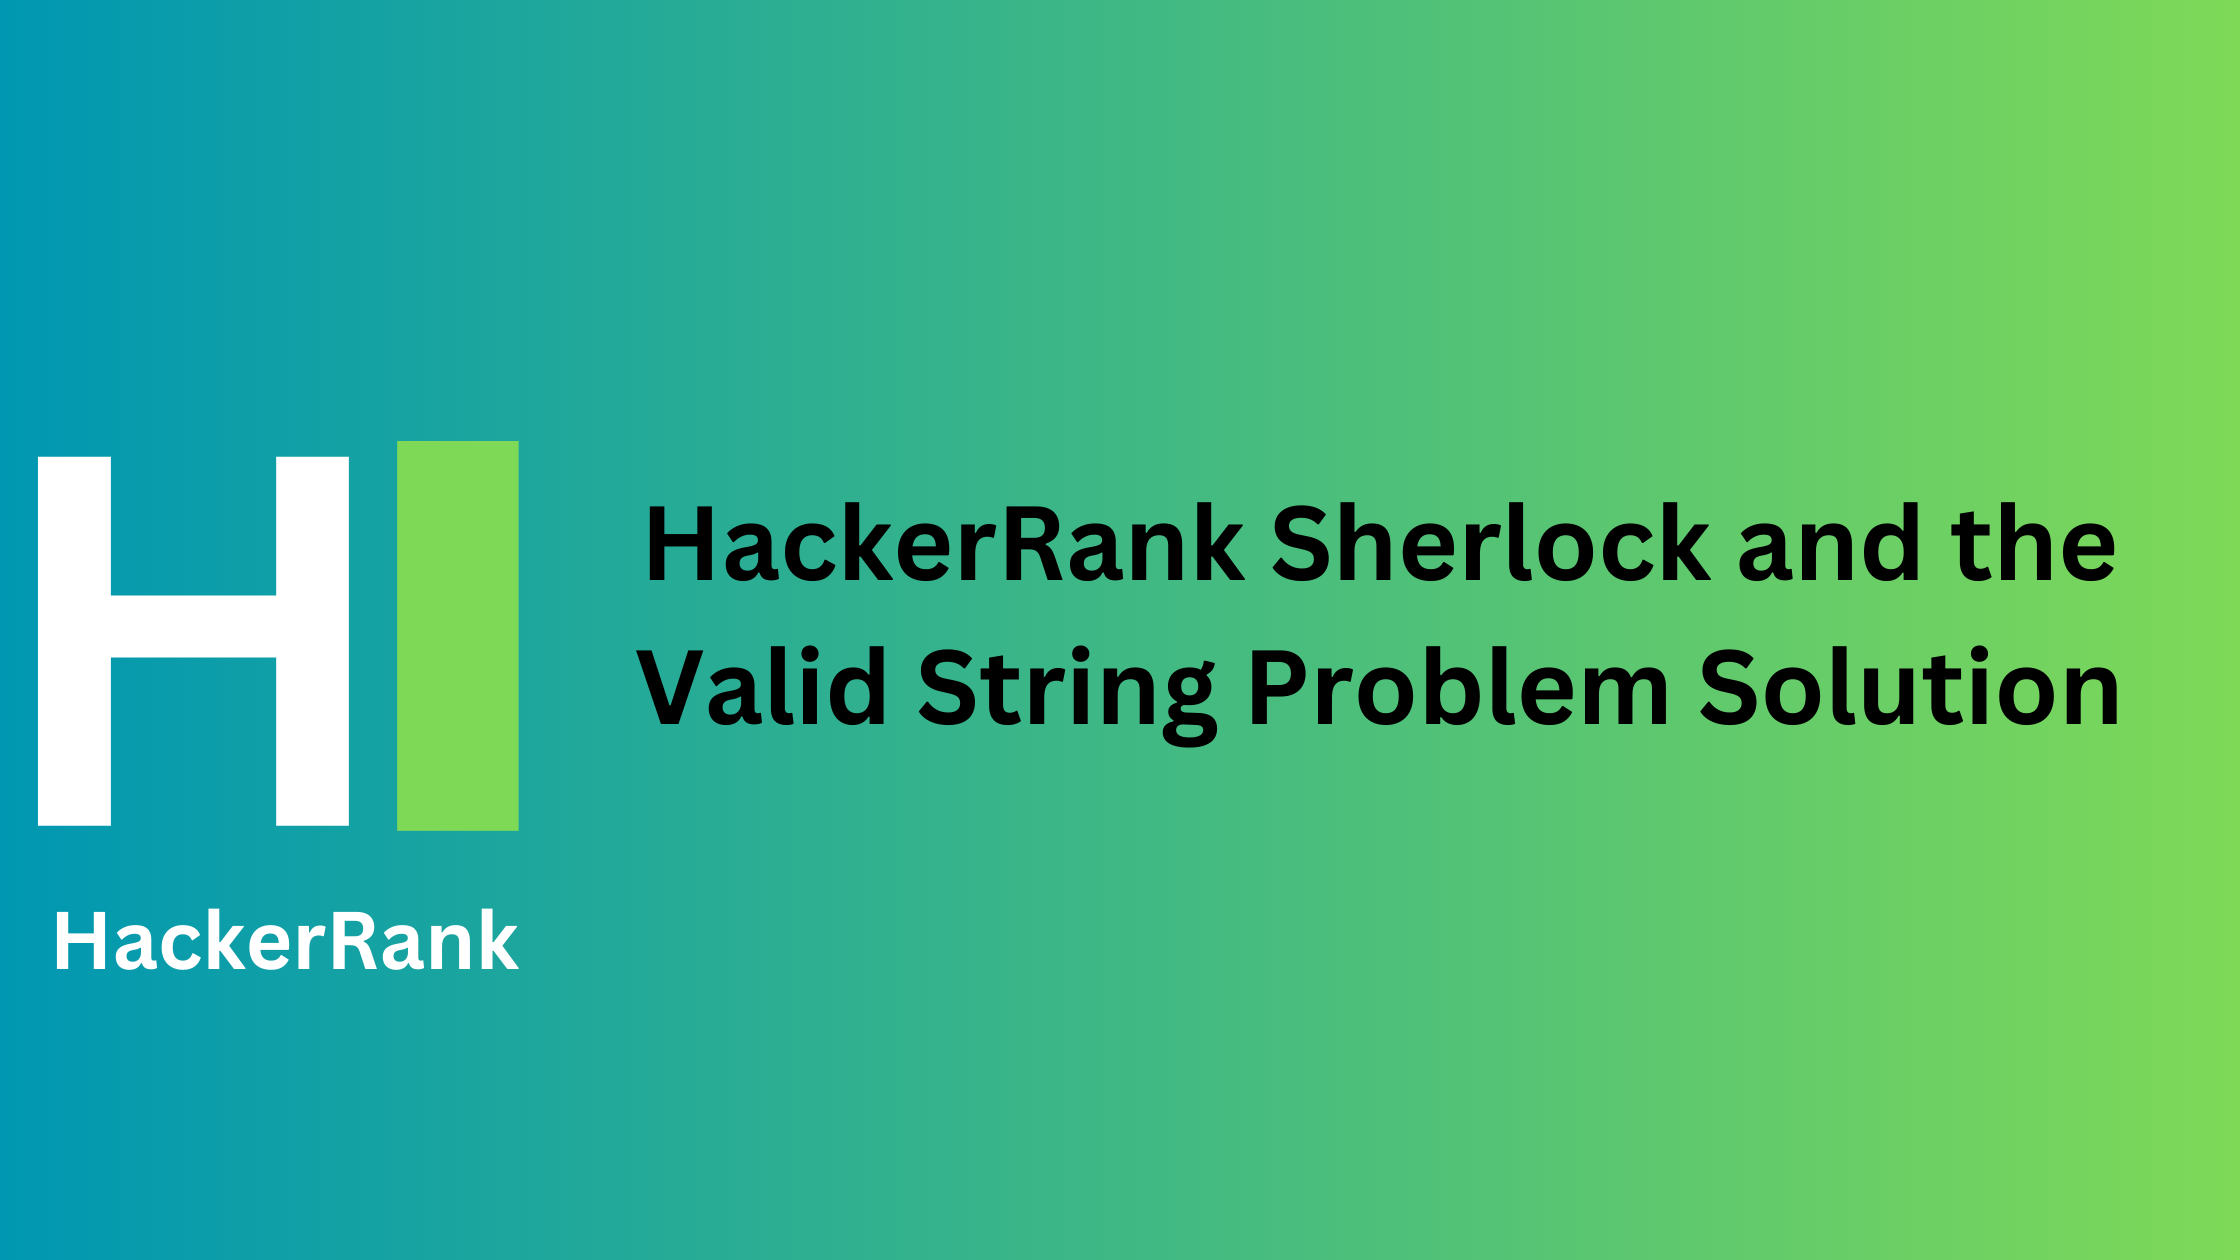 HackerRank Sherlock and the Valid String Problem Solution